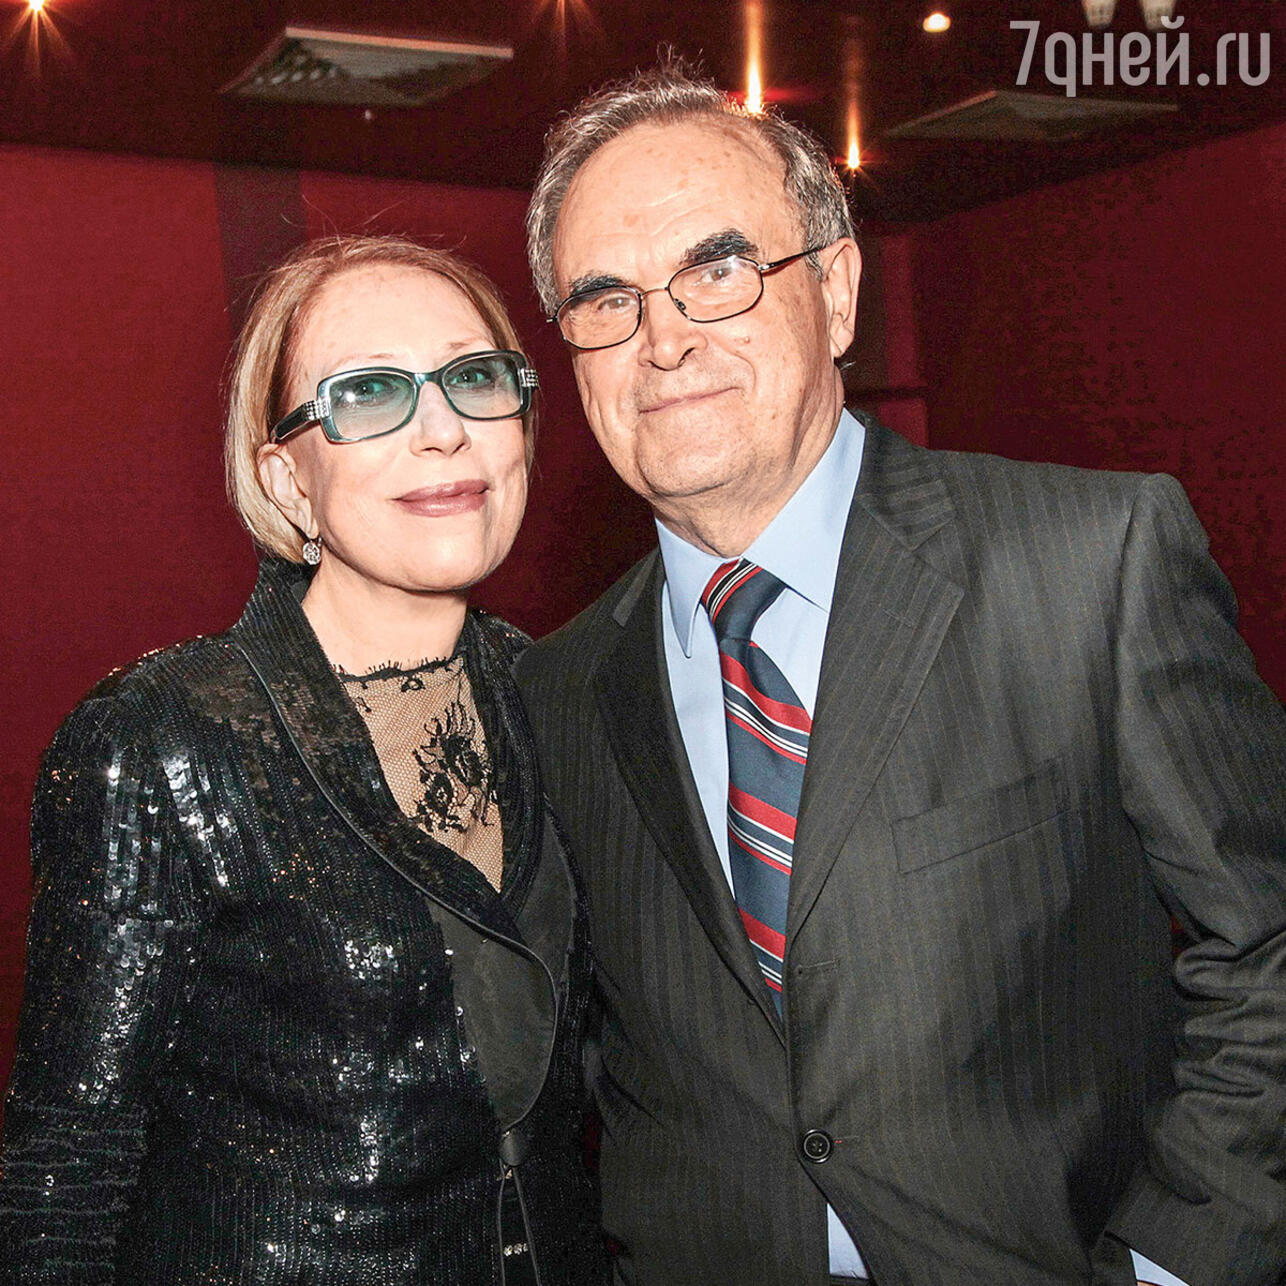 Инна Чурикова с мужем Глебом Панфиловым